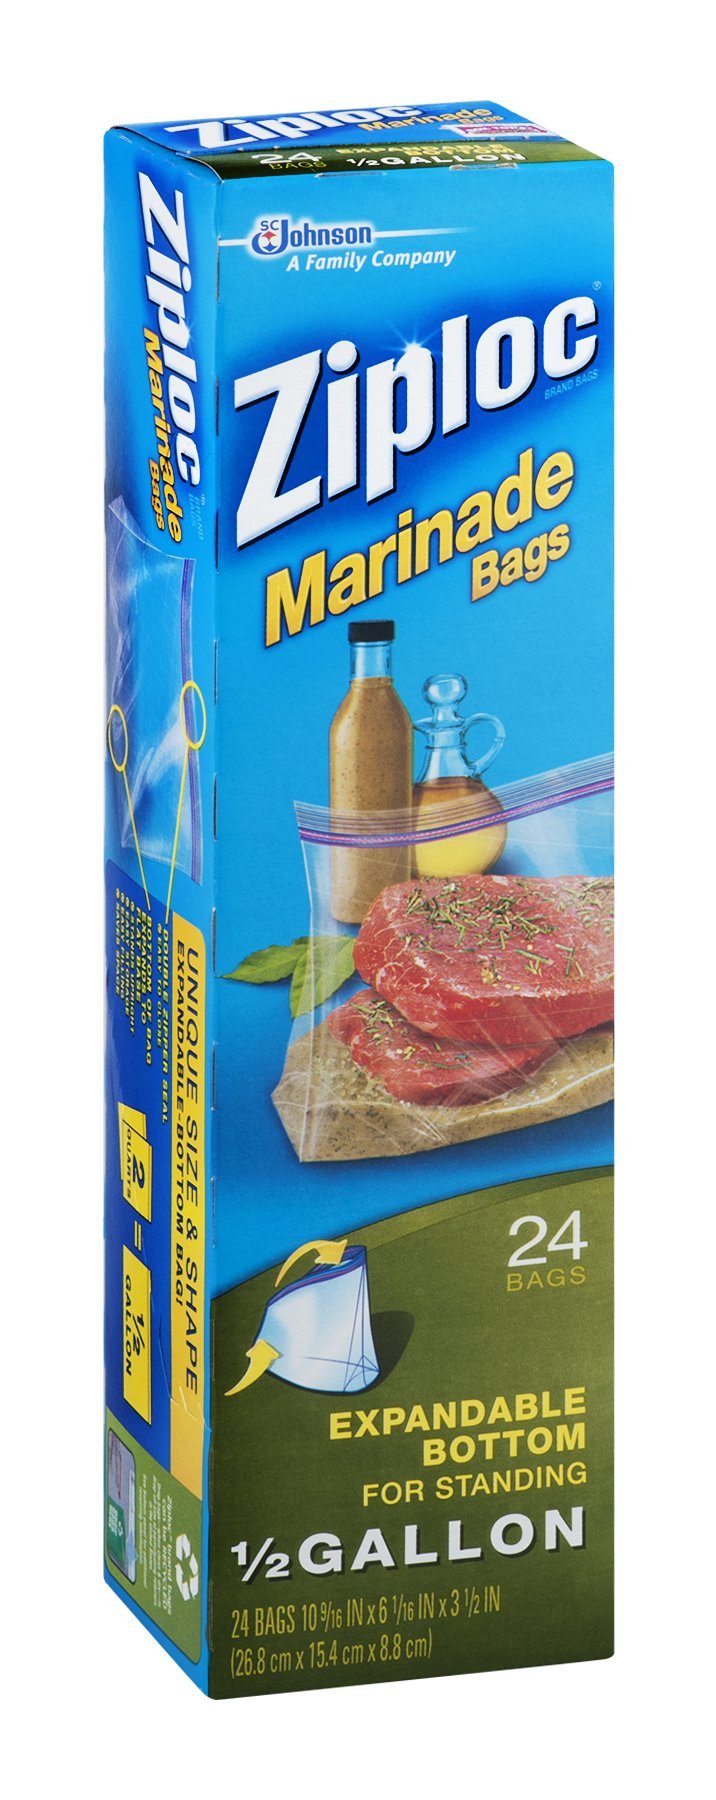 ZIPLOC FREEZER BAG 2 GALLON, Plastic Bags